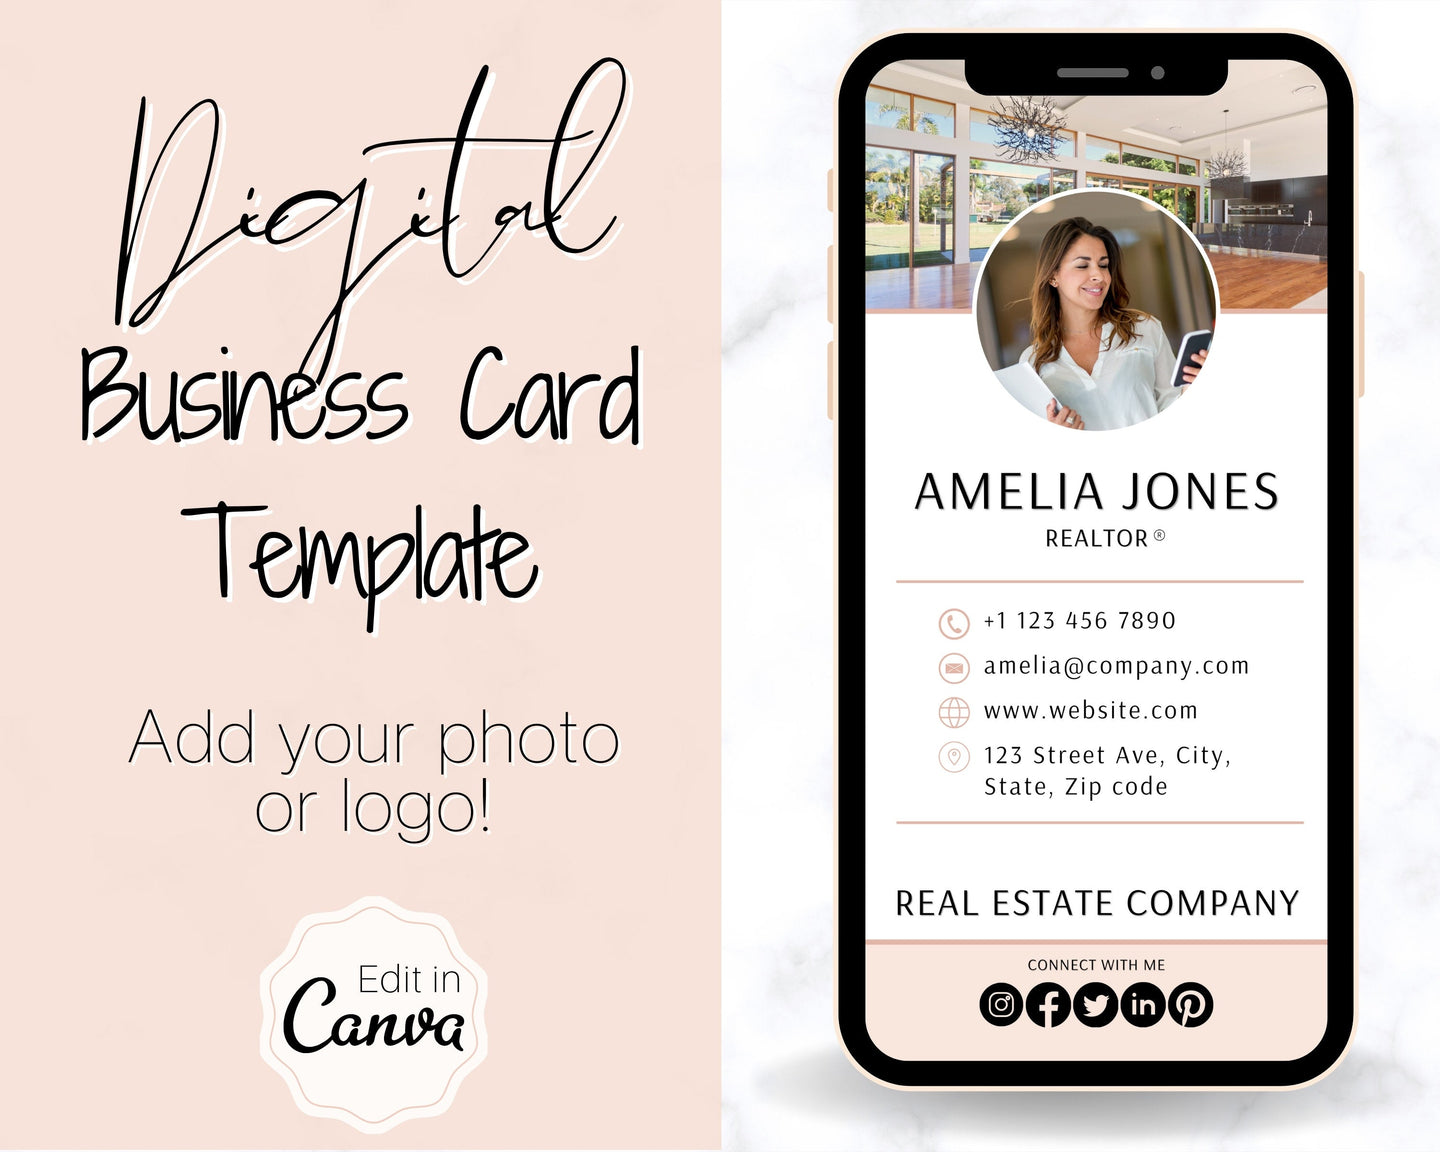 Digital Business Card Template. DIY add logo & photo! Editable Canva Design. Modern, Realtor Marketing, Real Estate, Realty Professional | Pink Style 6